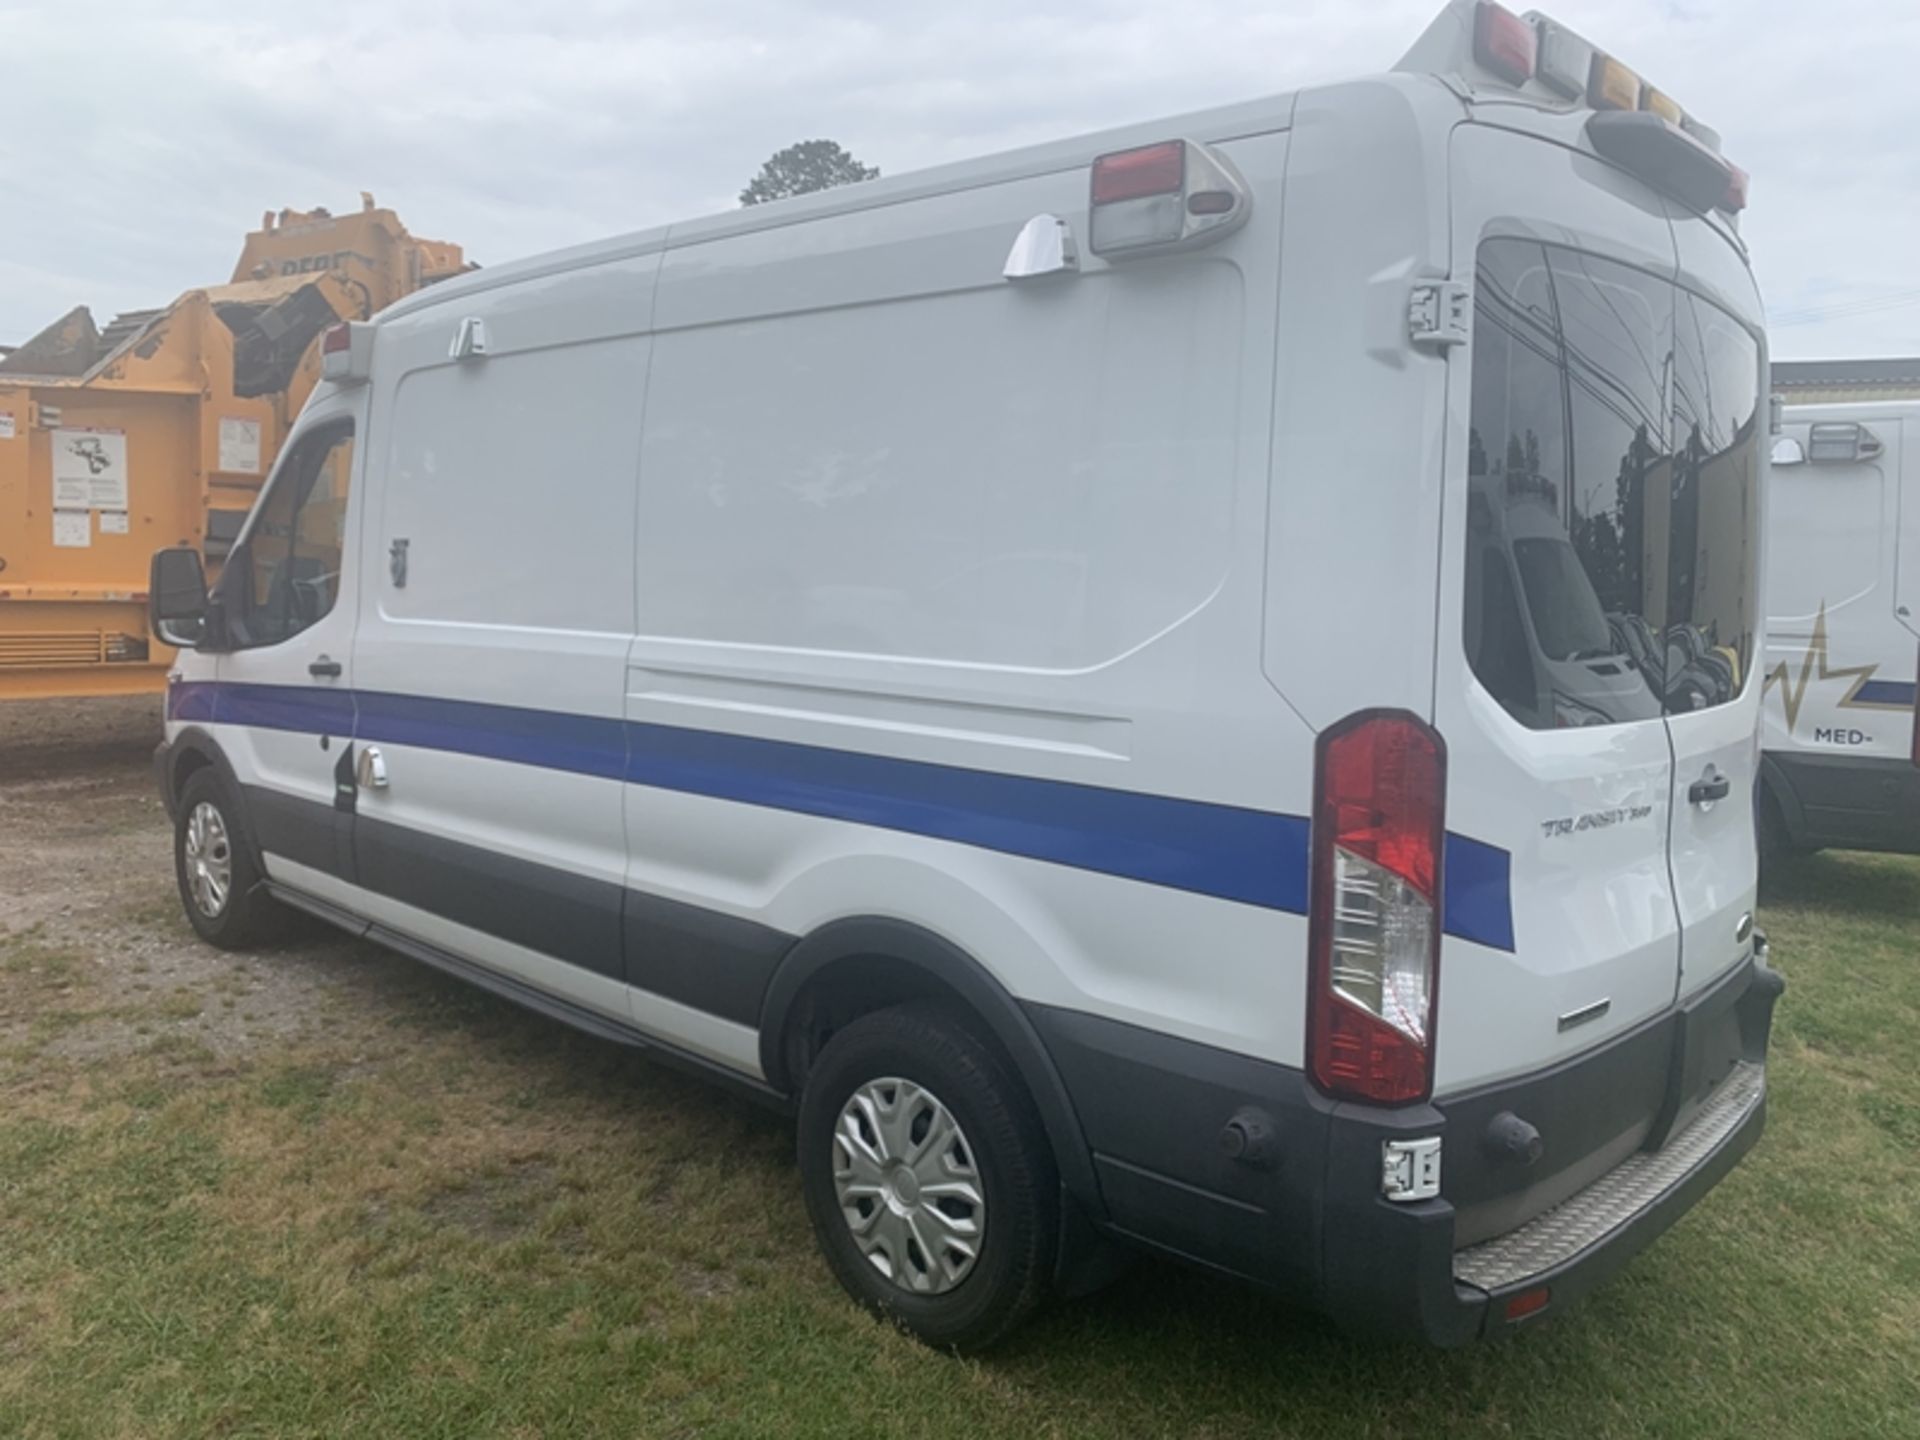 2018 FORD Transit 350 Sprinter Van, Type II Ambulance, 3.2L dsl - 194,131 miles - VIN: - Image 4 of 6